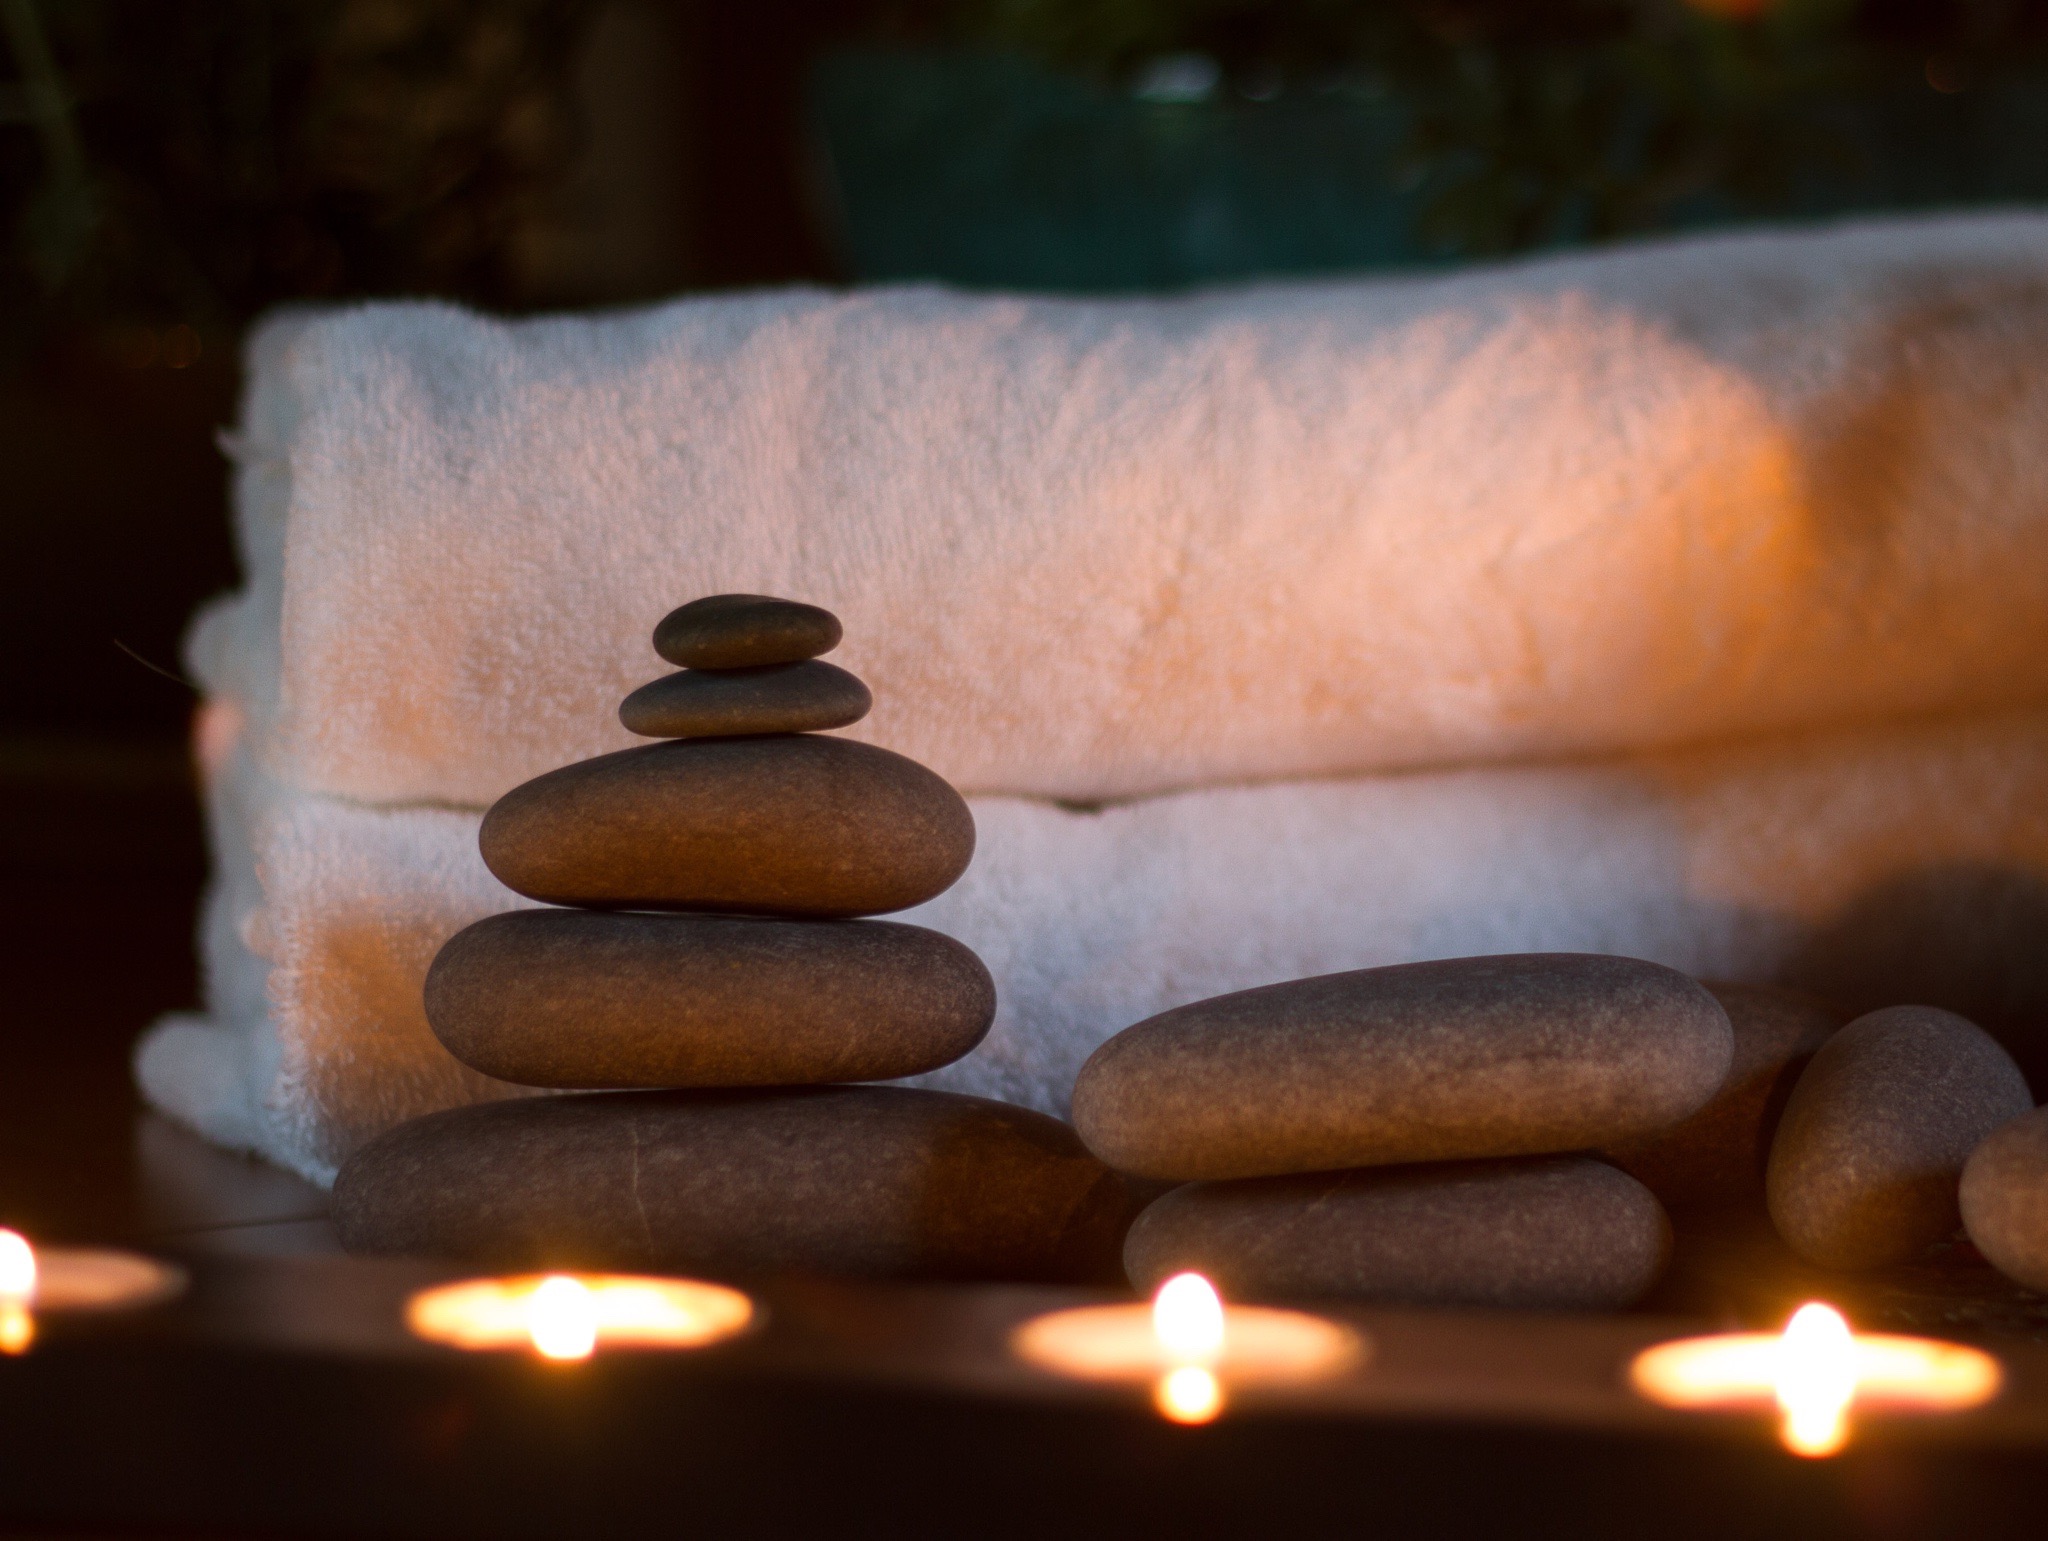 Massage Relaxation